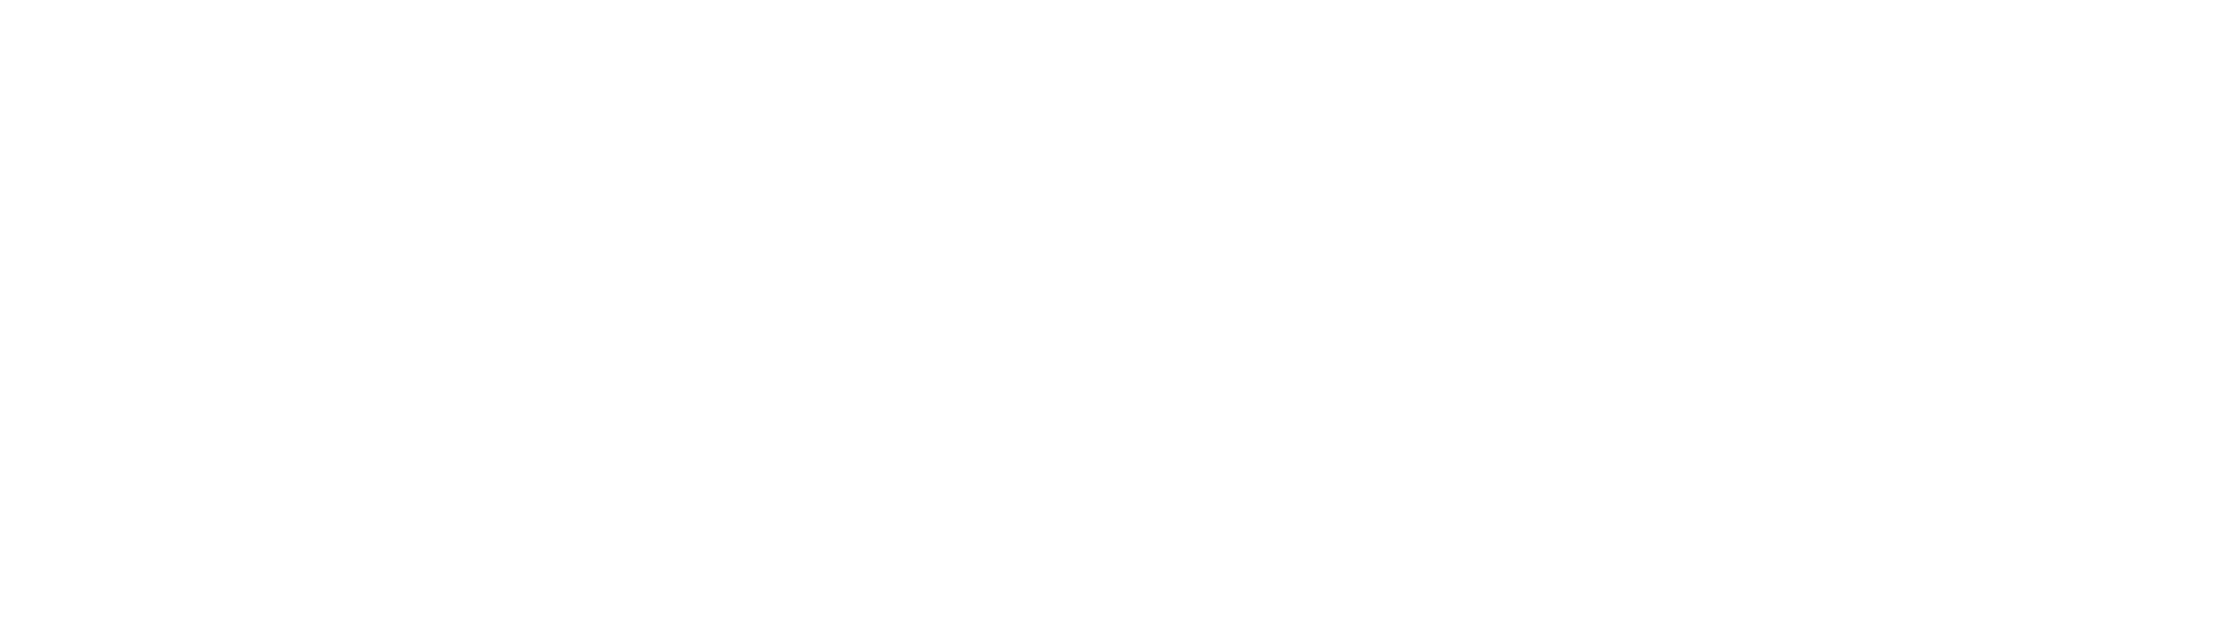 vizzee_logo